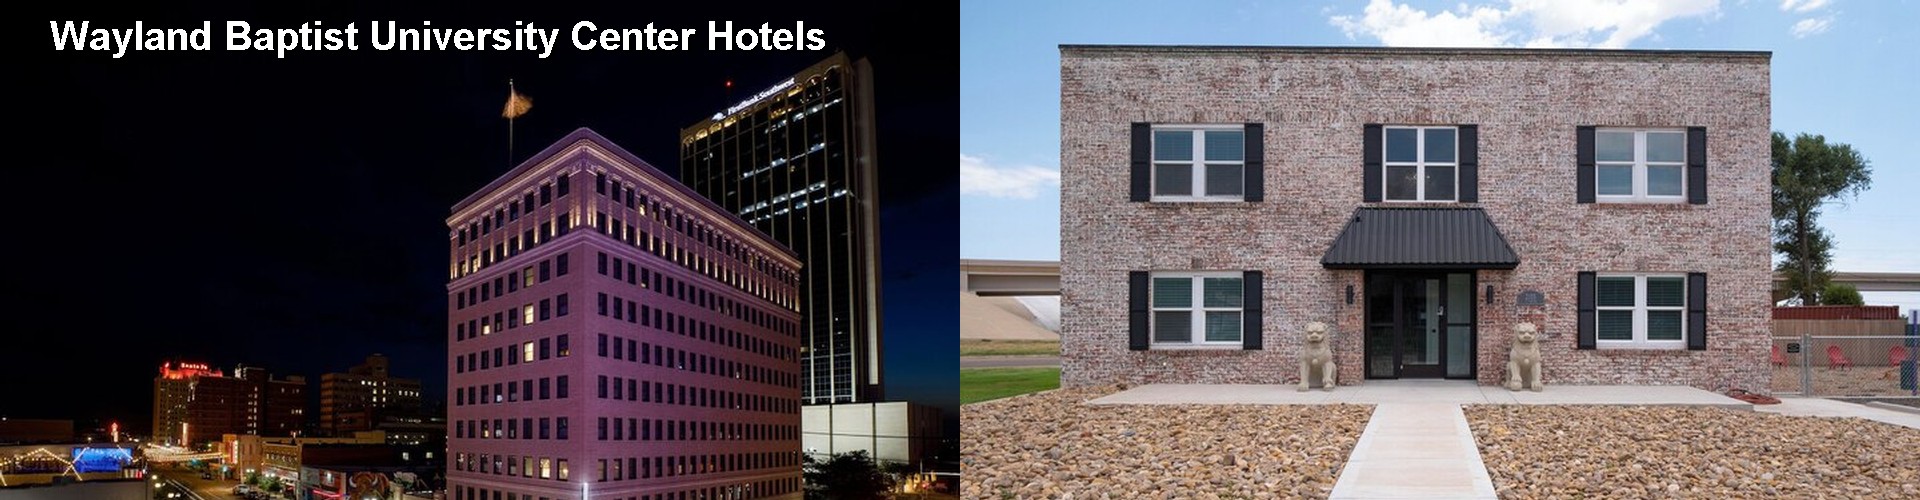 3 Best Hotels near Wayland Baptist University Center